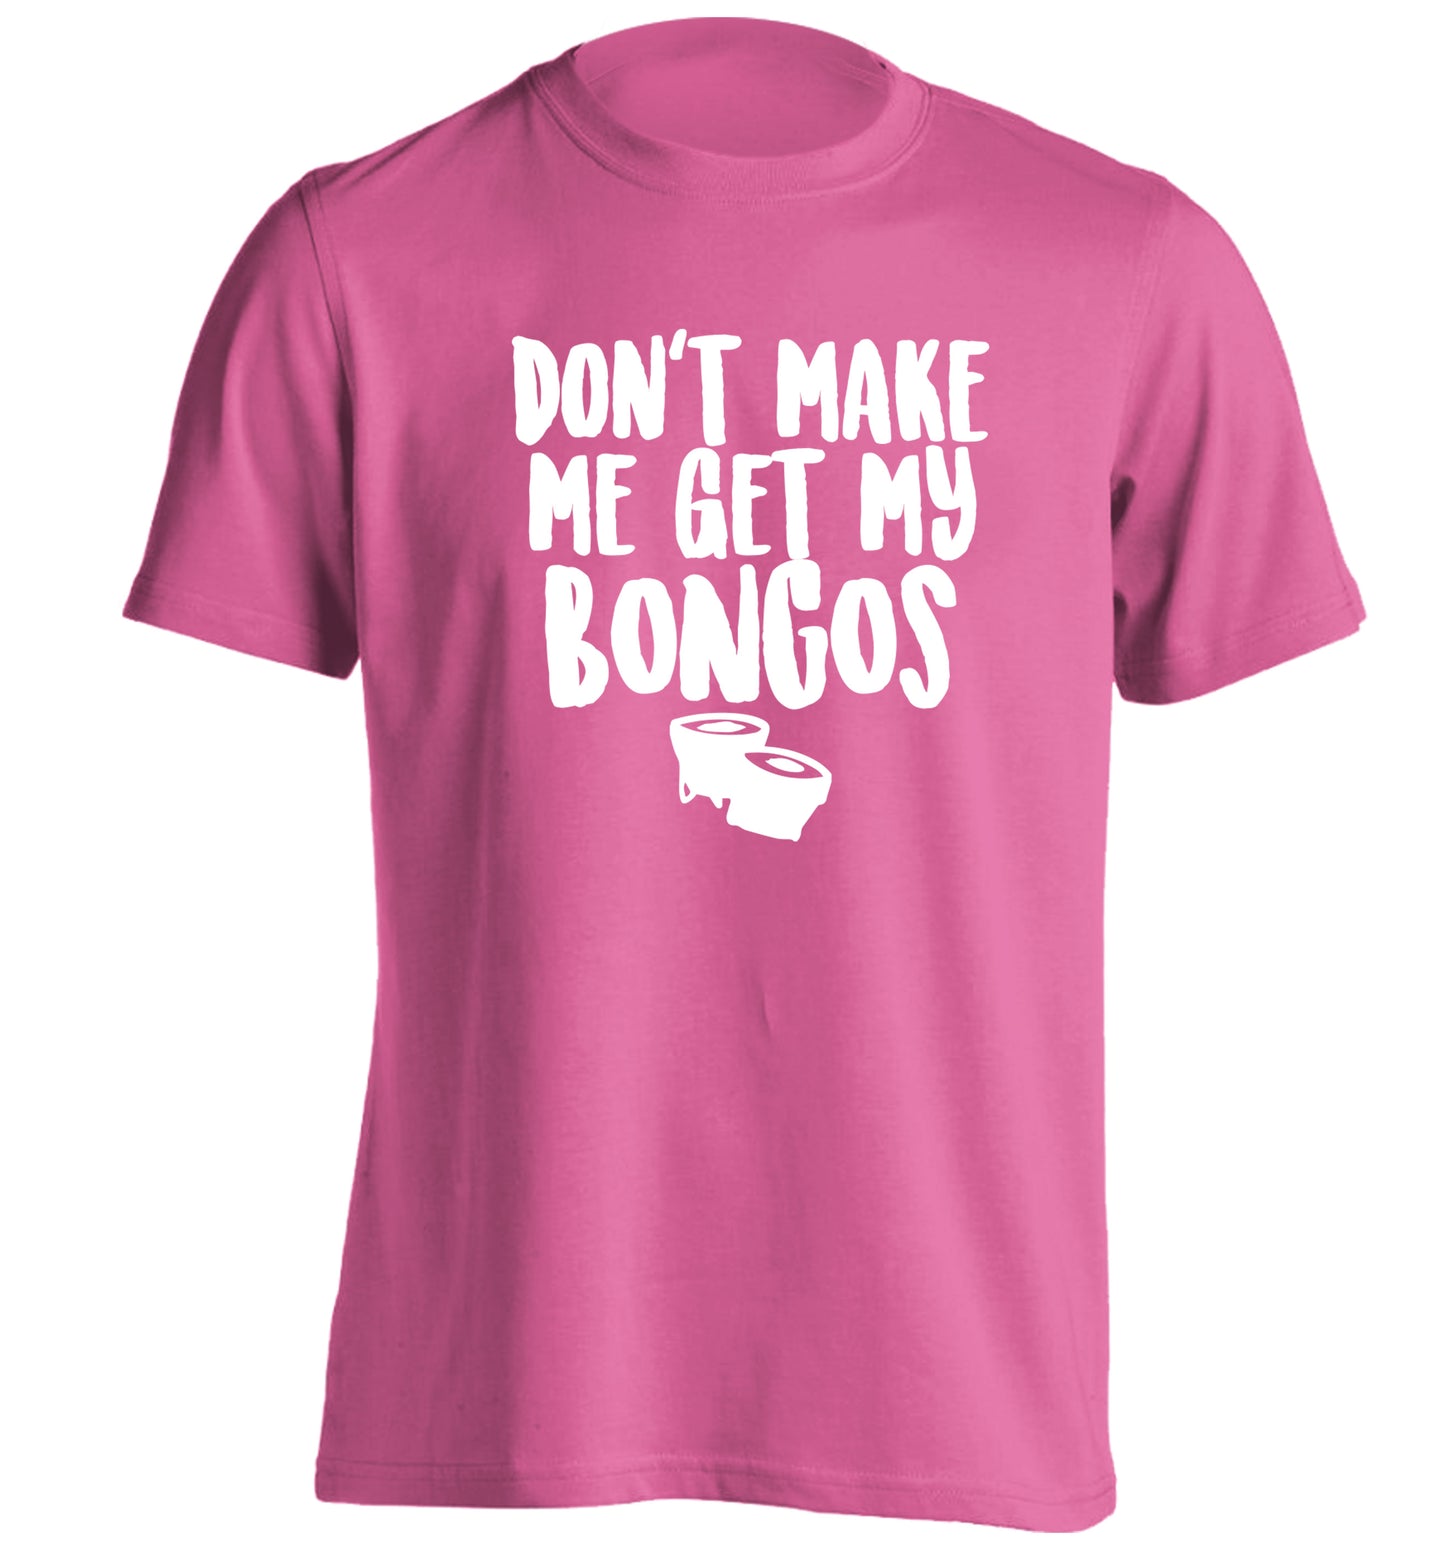 Don't make me get my bongos adults unisex pink Tshirt 2XL